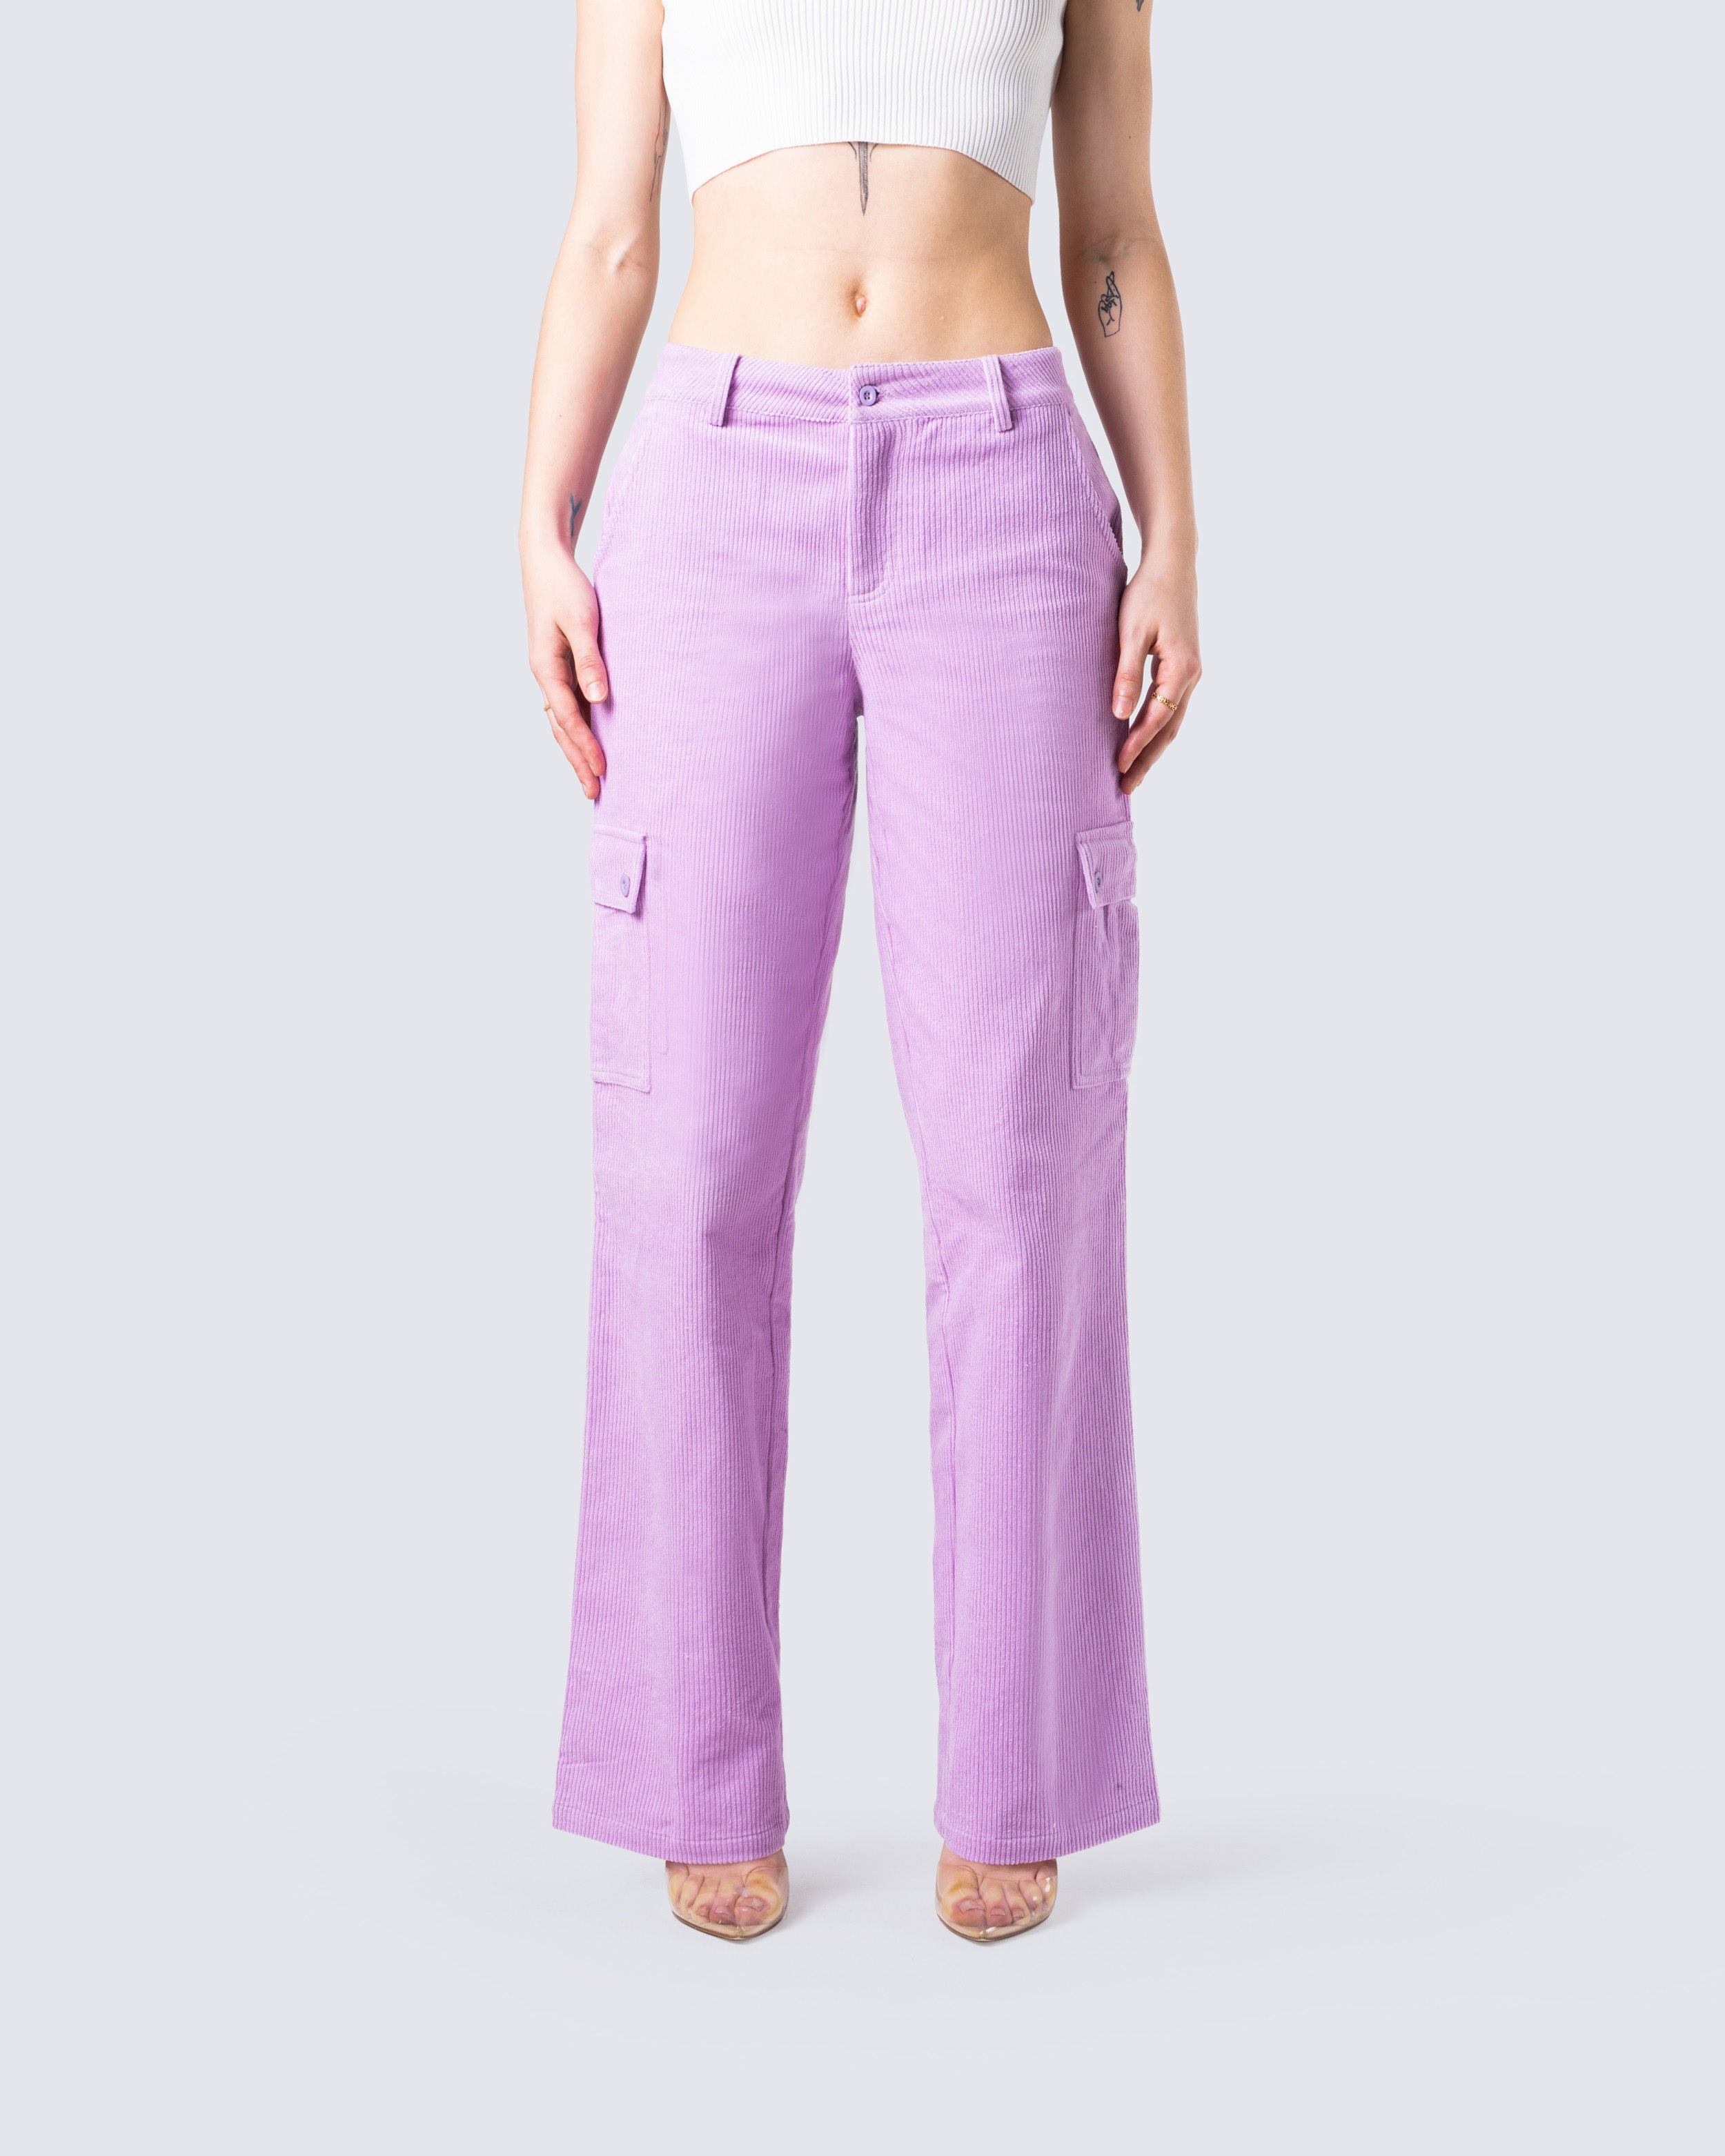 Mac & Jac Women's Straight Wide Leg Light Plum Corduroy Pants Size 10 | eBay